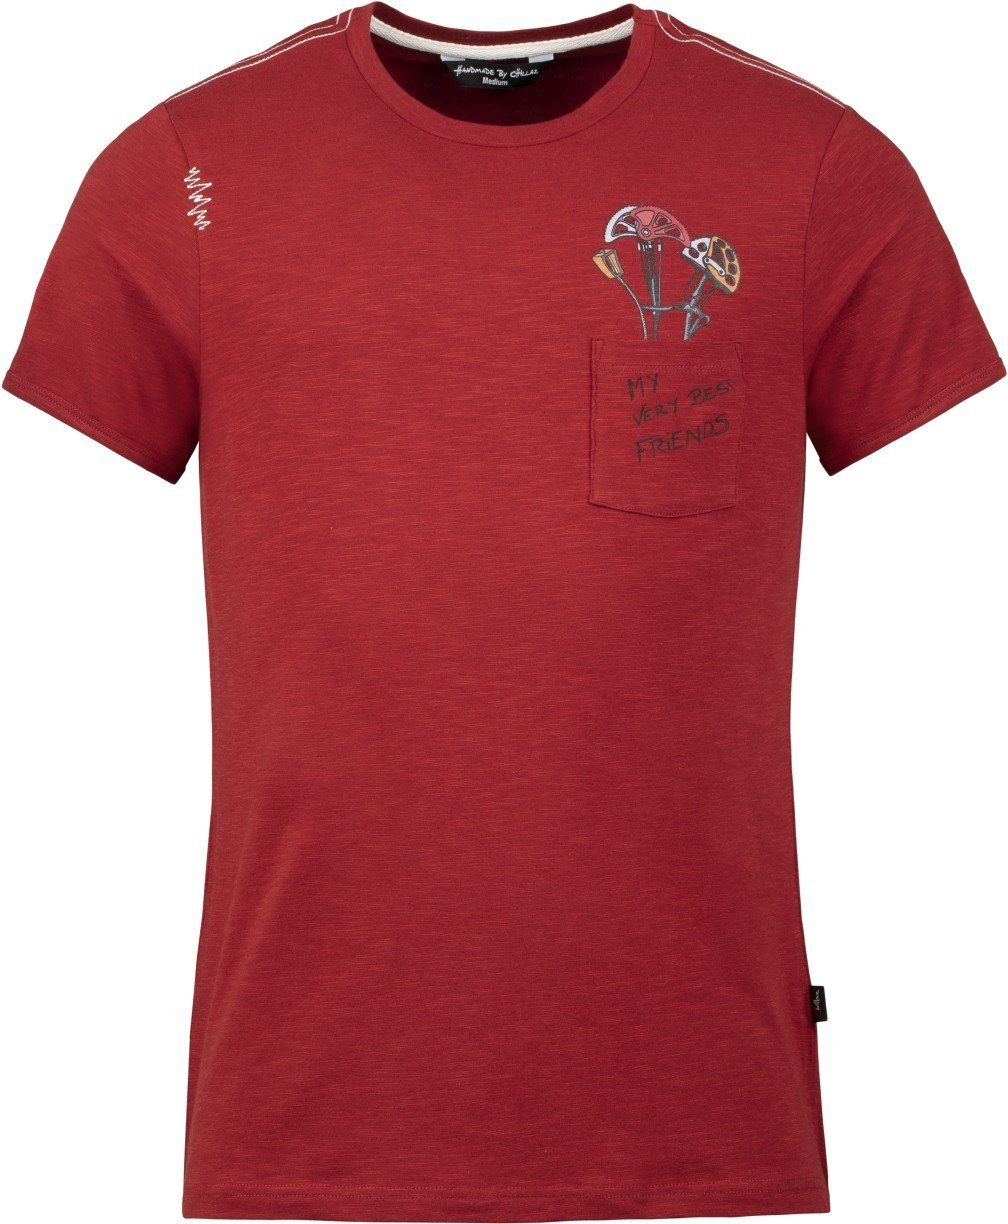 Chillaz T-Shirt Pocket dark Friends red T-Shirt